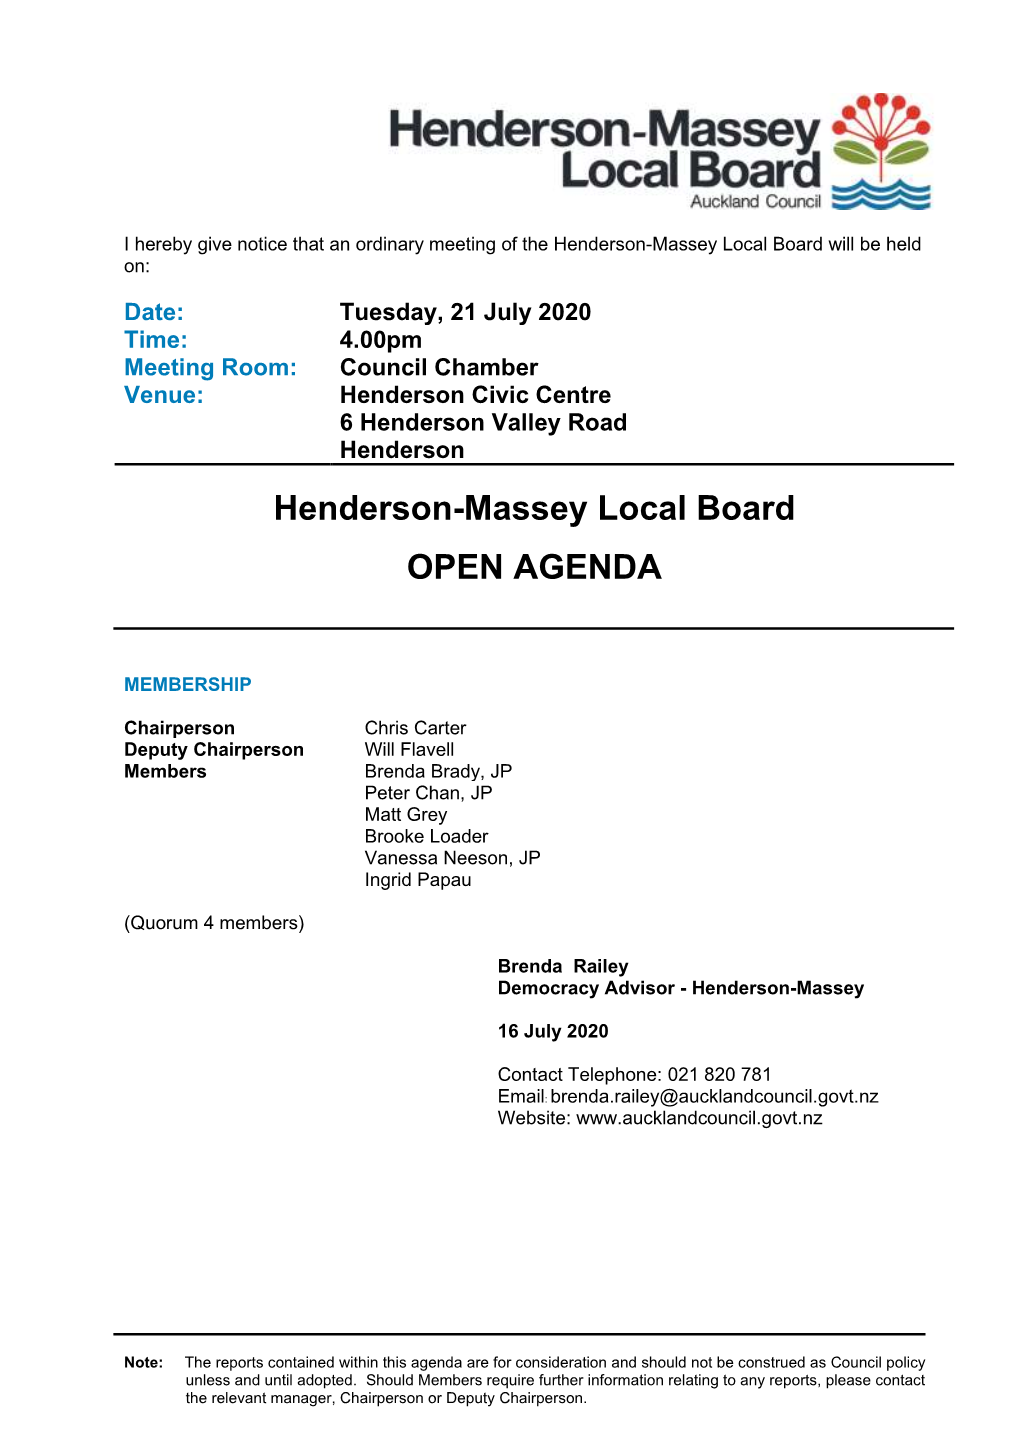 Agenda of Henderson-Massey Local Board